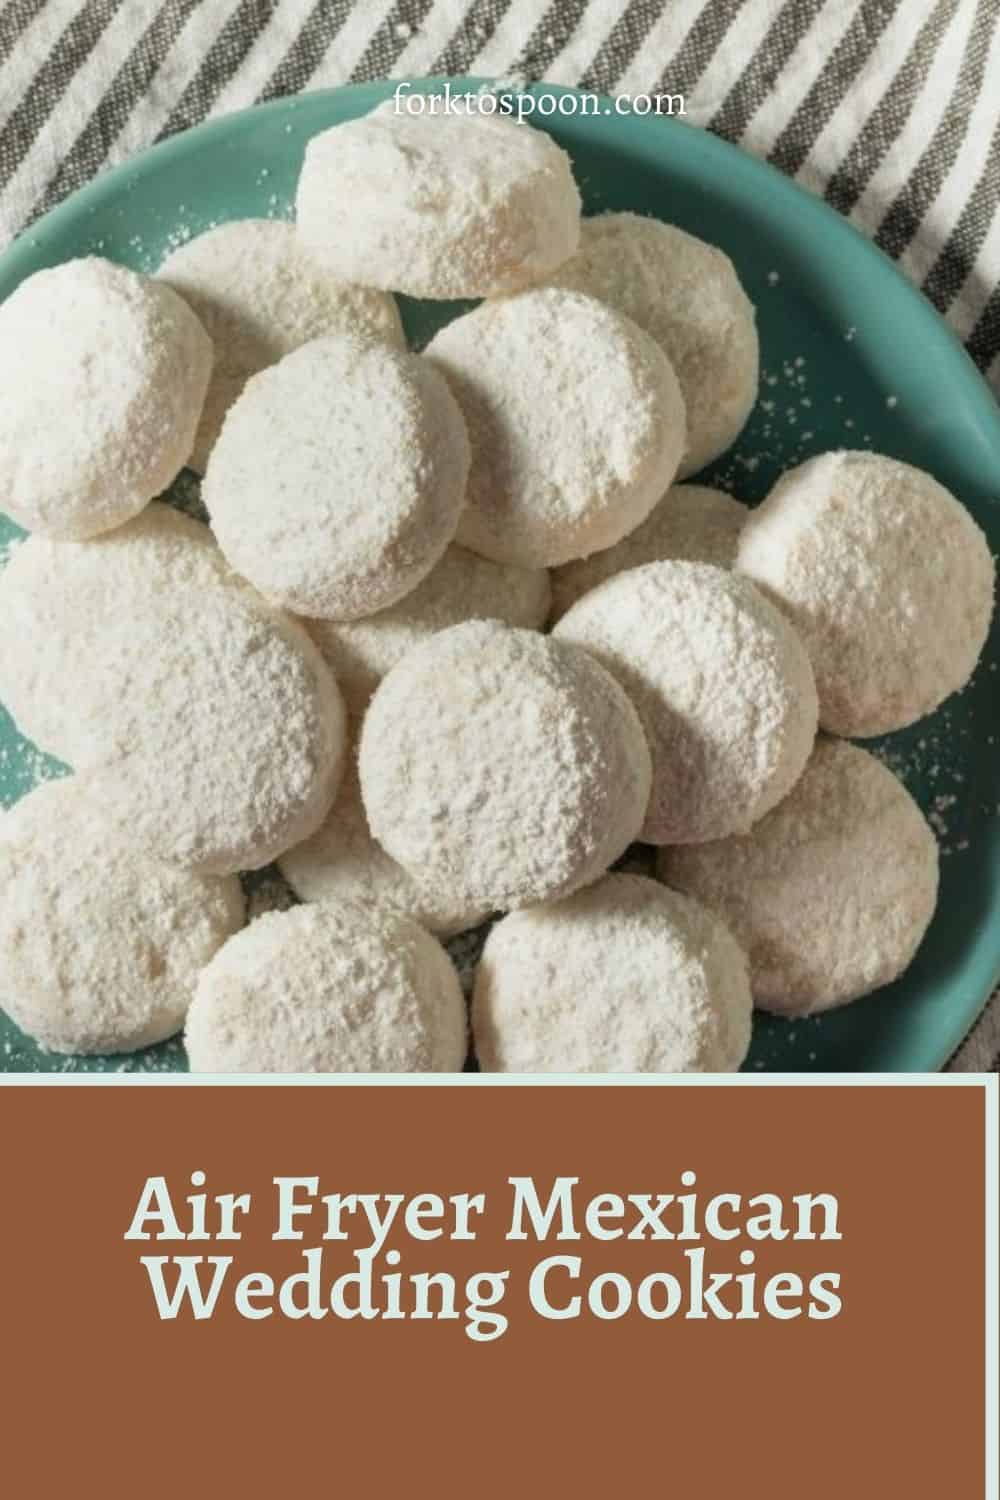 Air Fryer Mexican Wedding Cookies